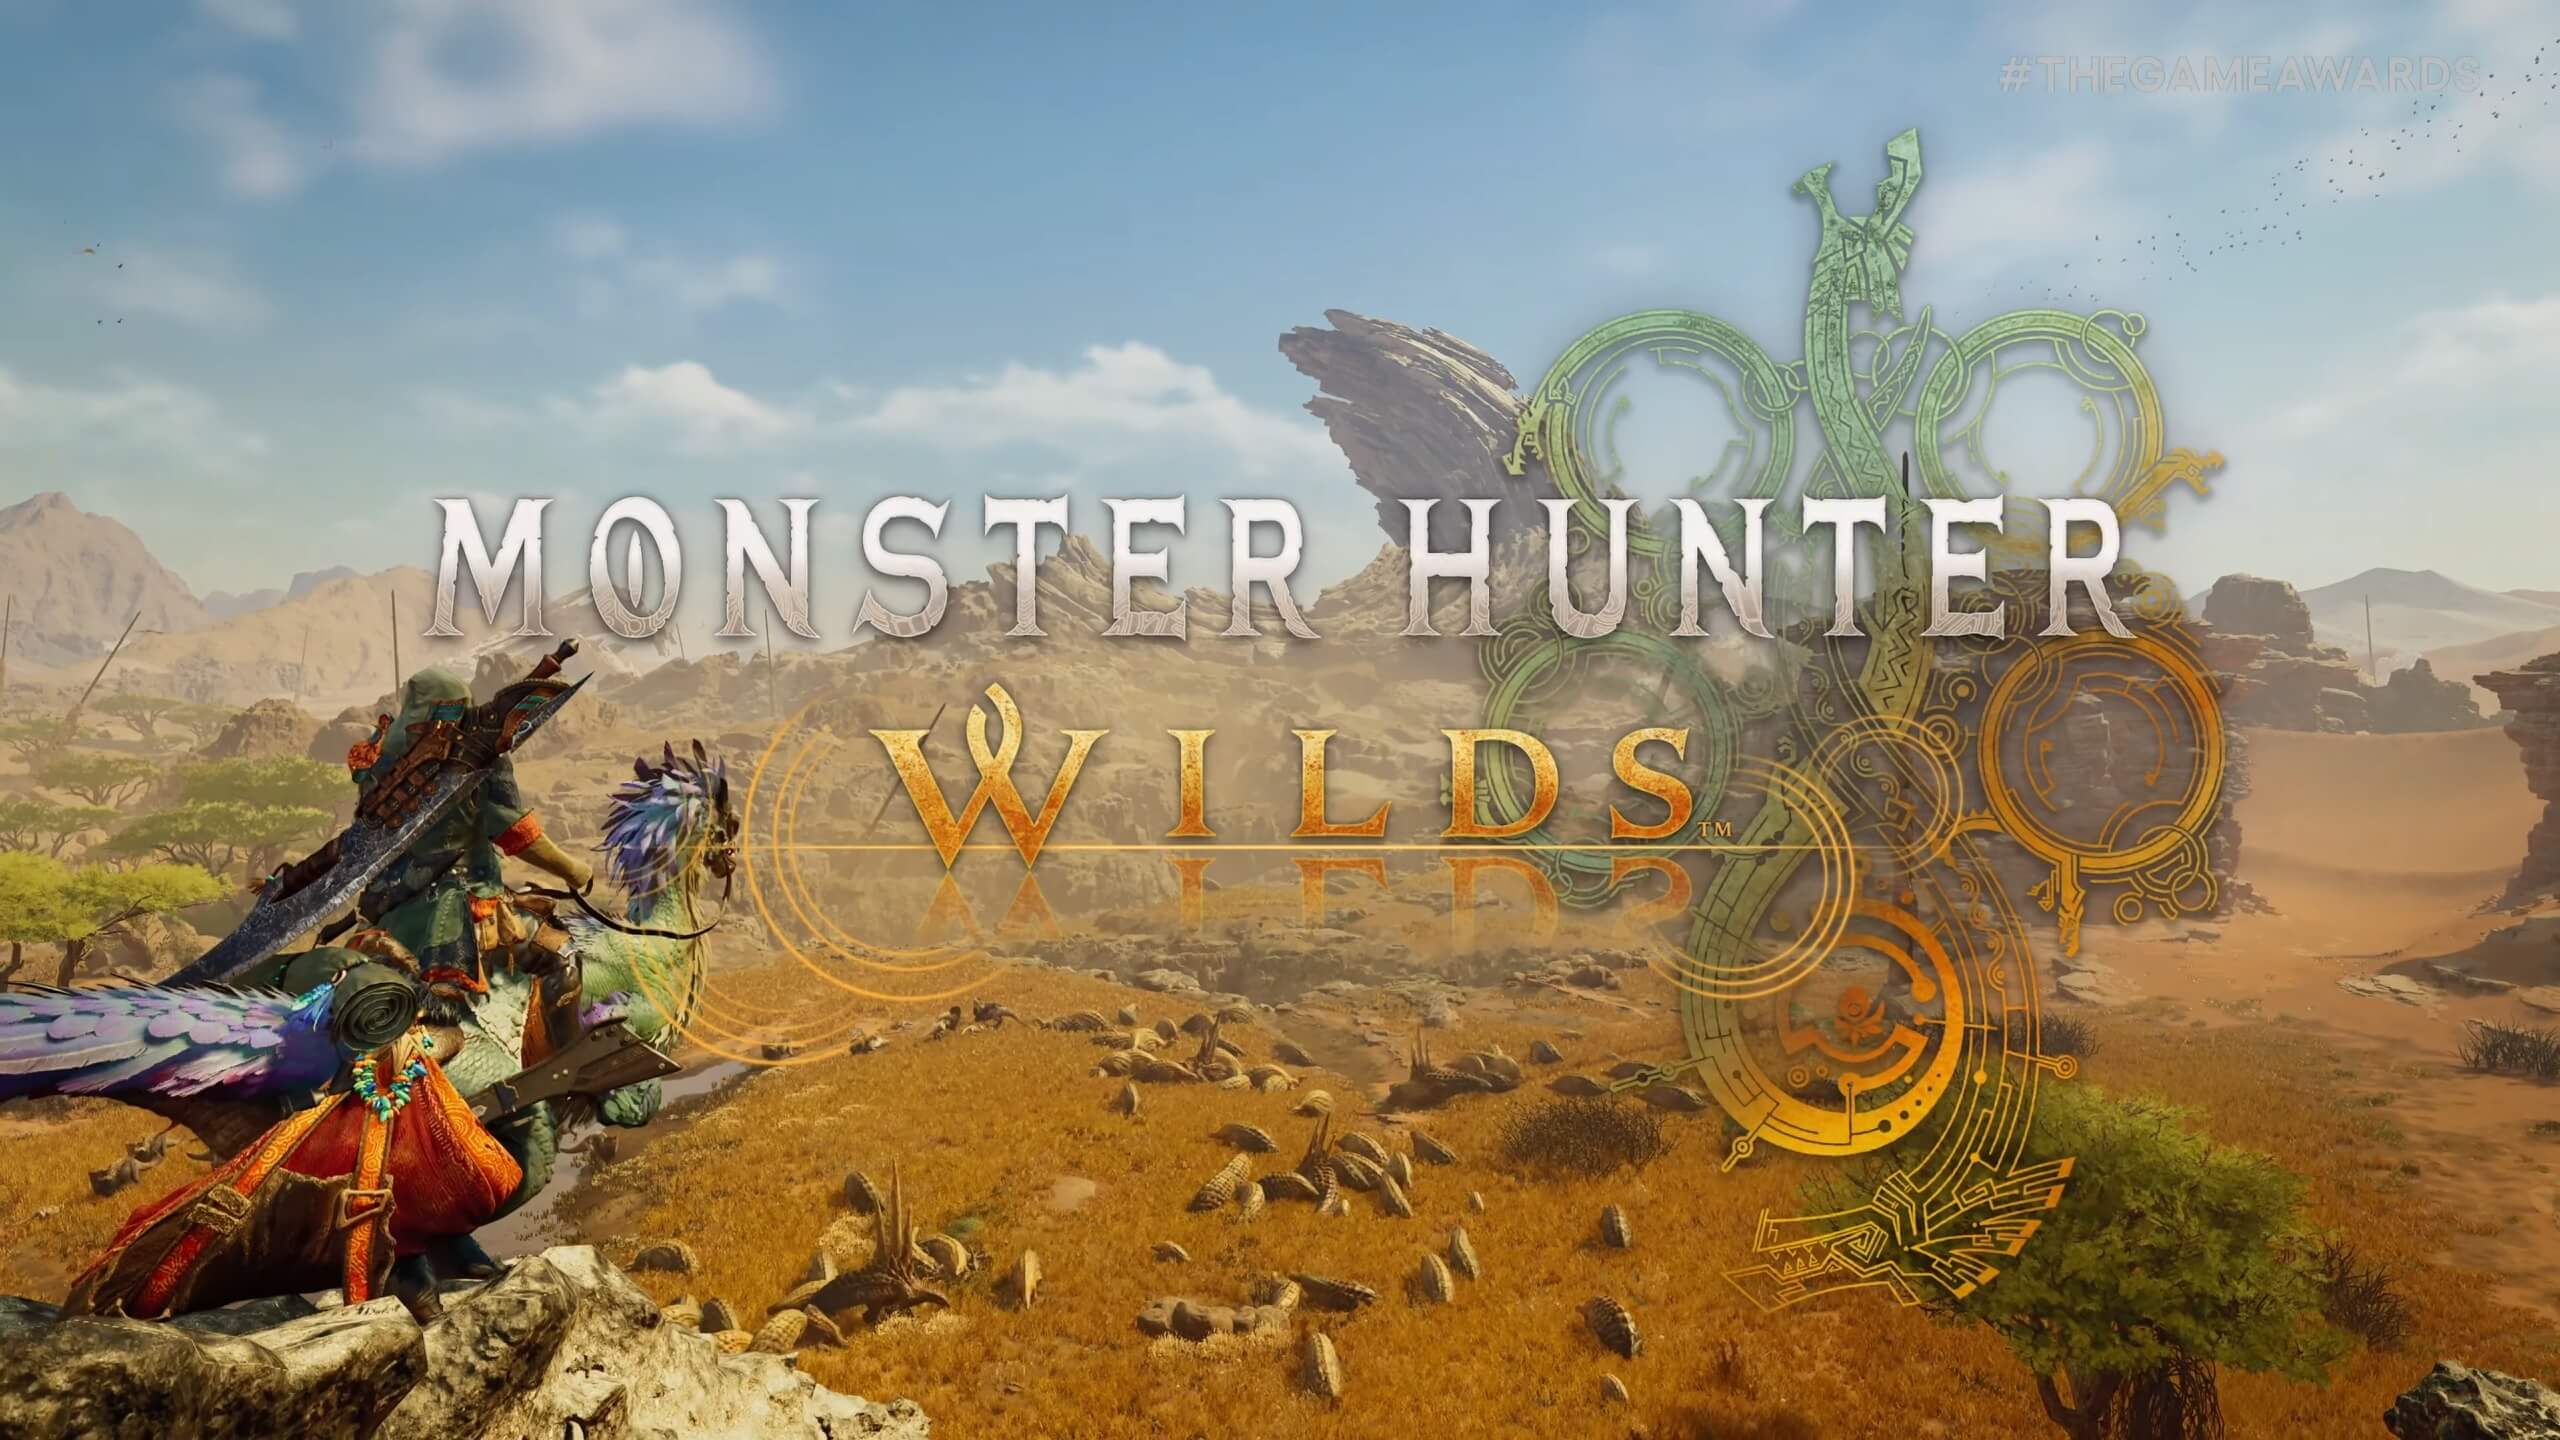 Вот первый геймплейный трейлер Monster Hunter Wilds